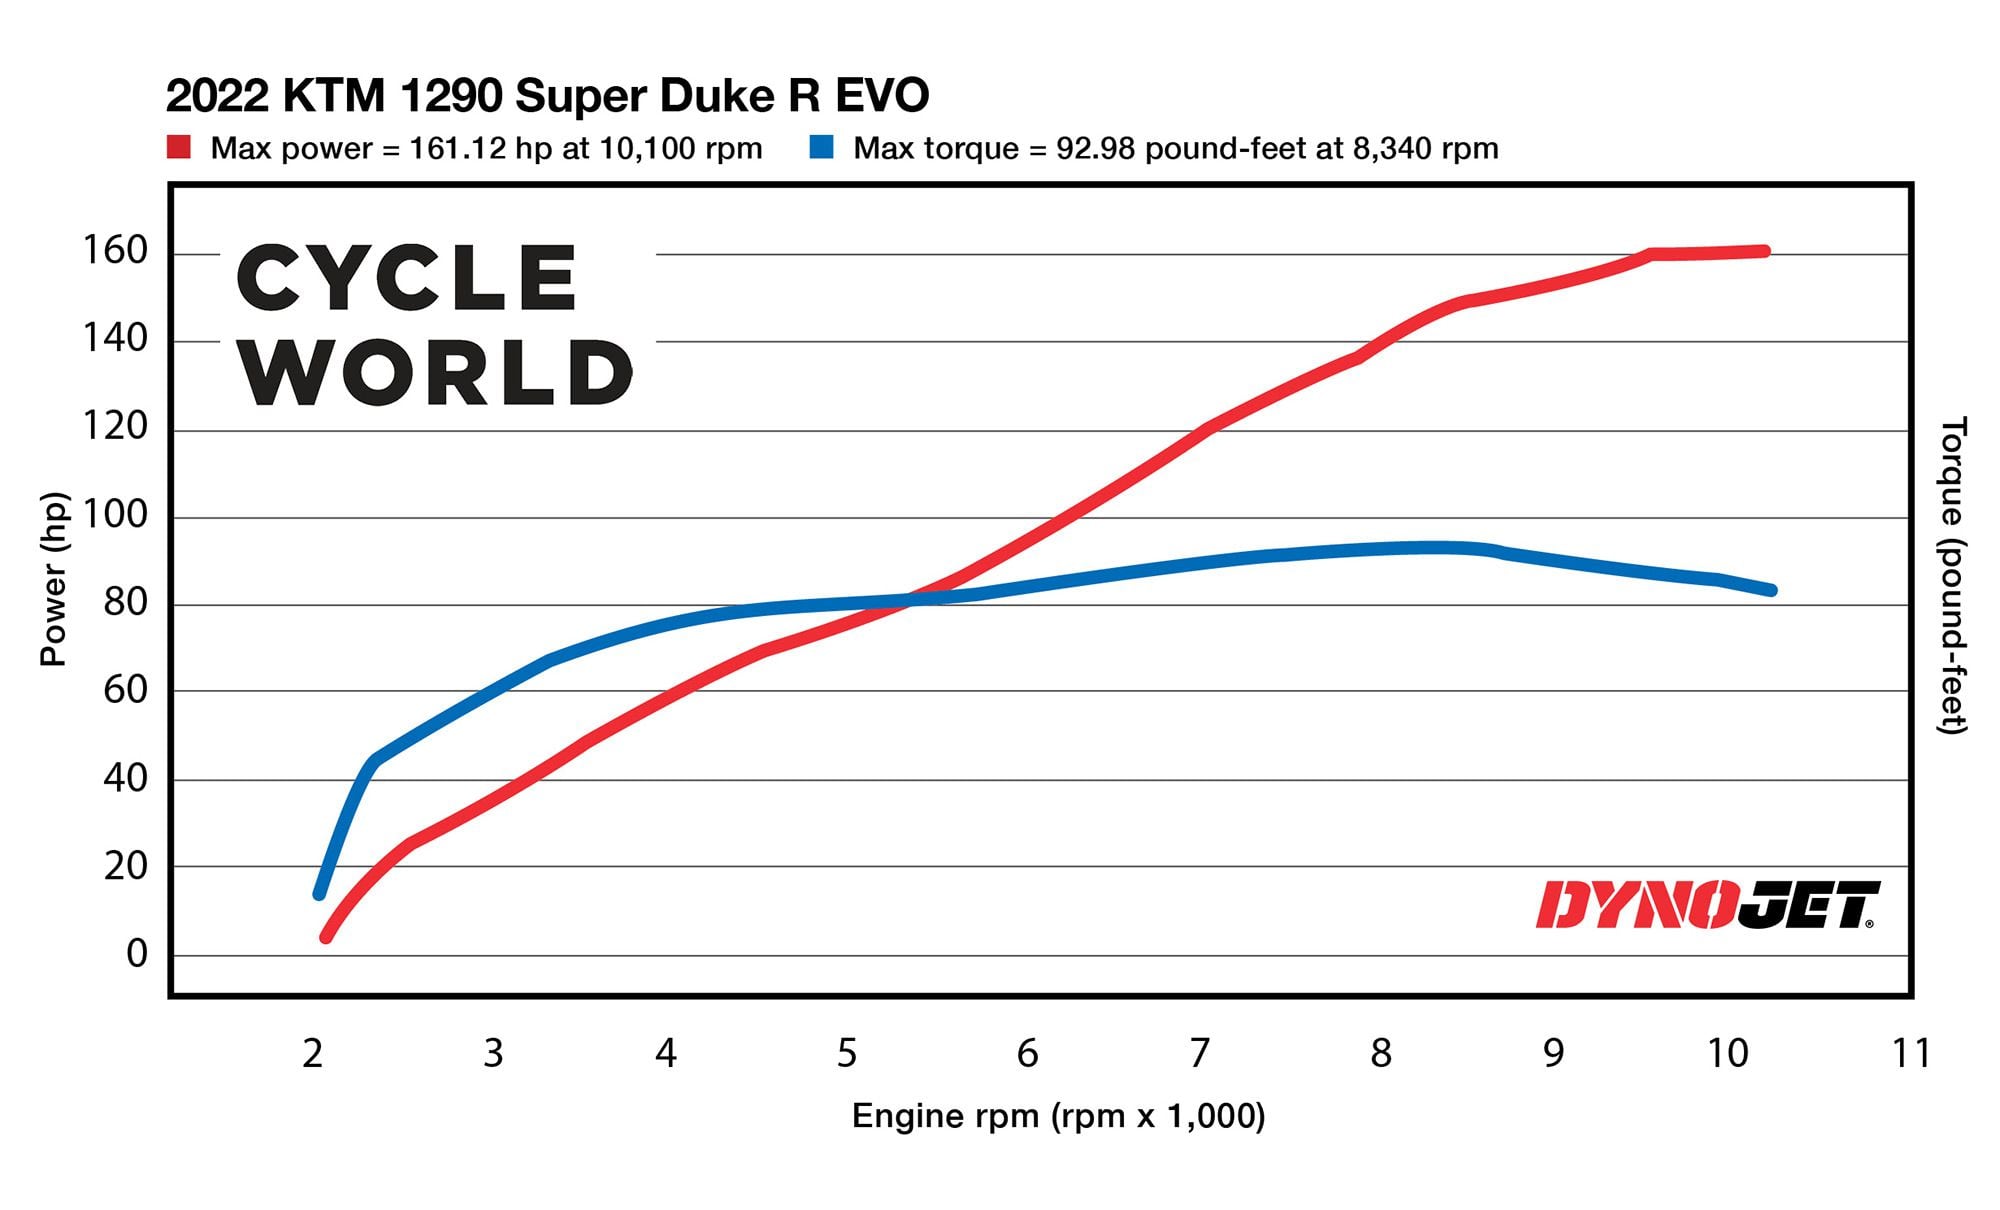 Horsepower and torque figures of the 2022 KTM 1290 Super Duke R Evo.